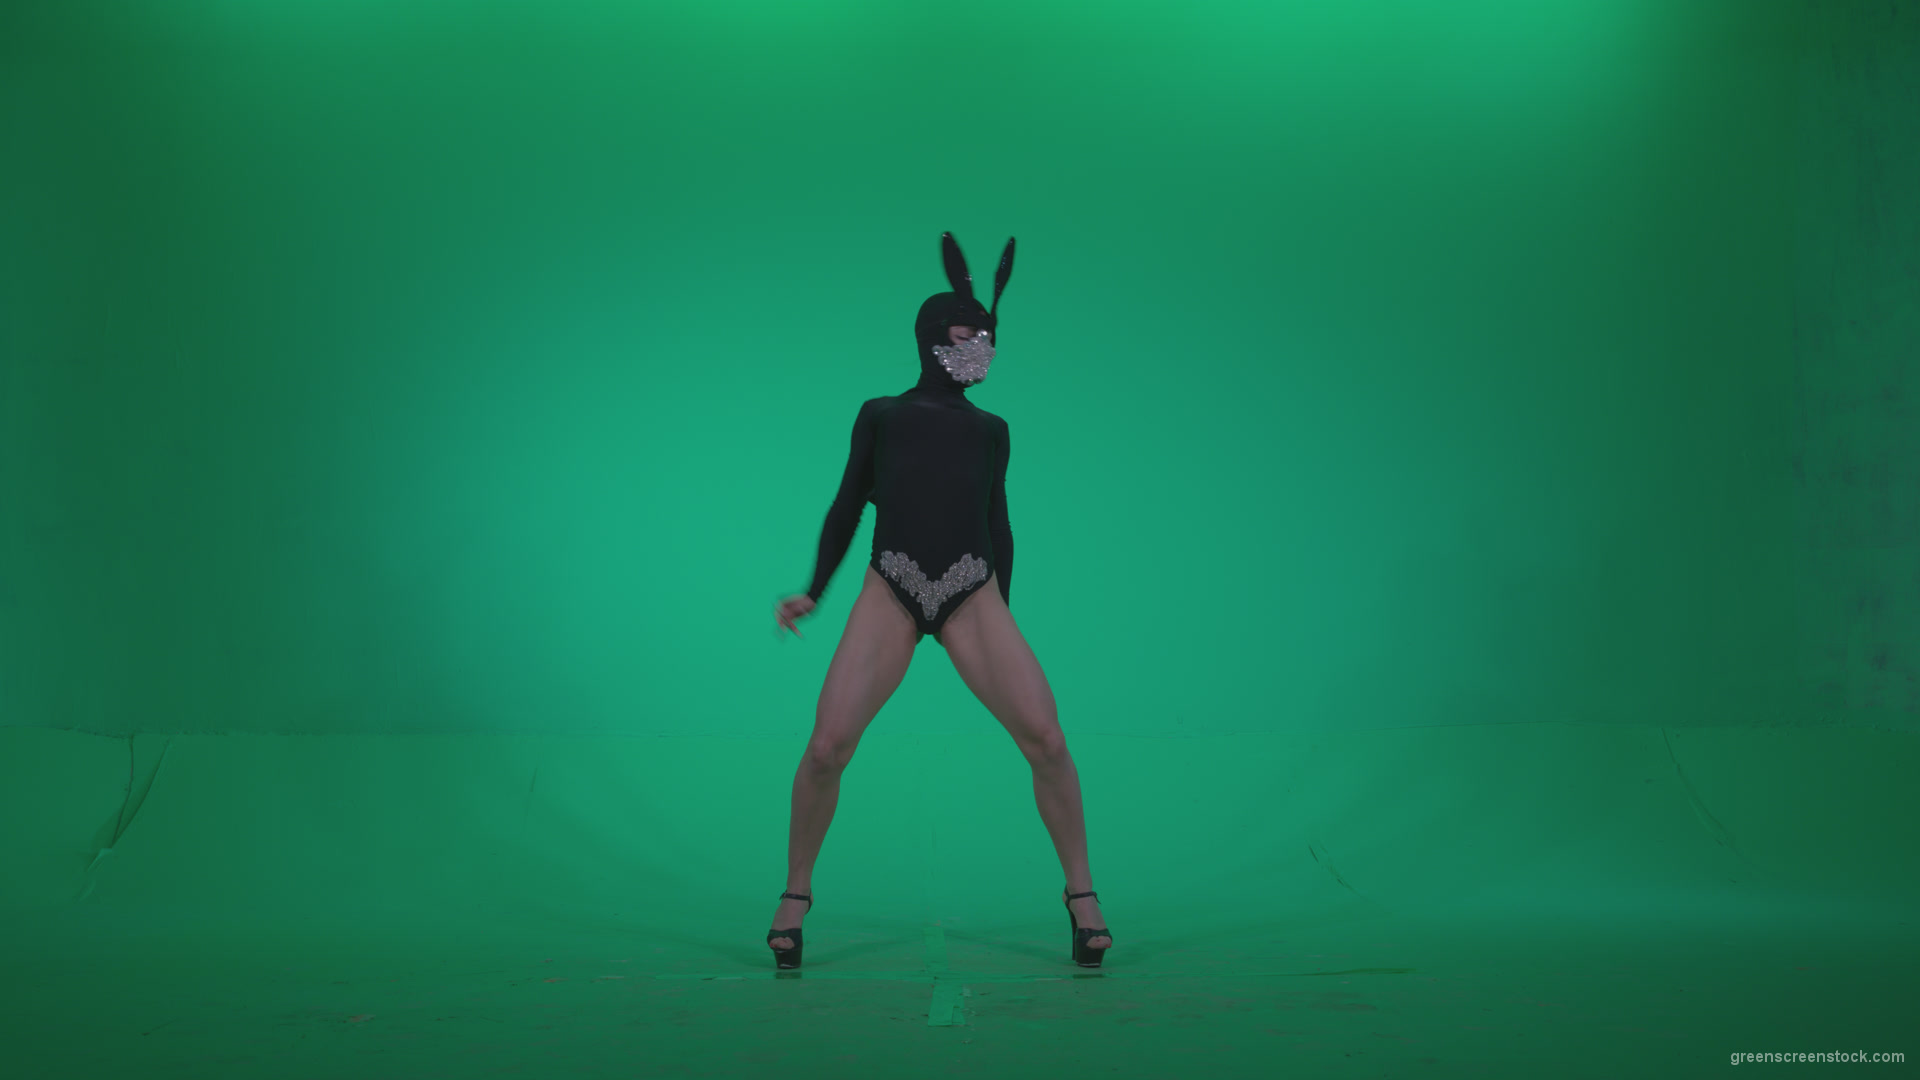 Go-go-Dancer-Black-Rabbit-u9-Green-Screen-Video-Footage_001 Green Screen Stock